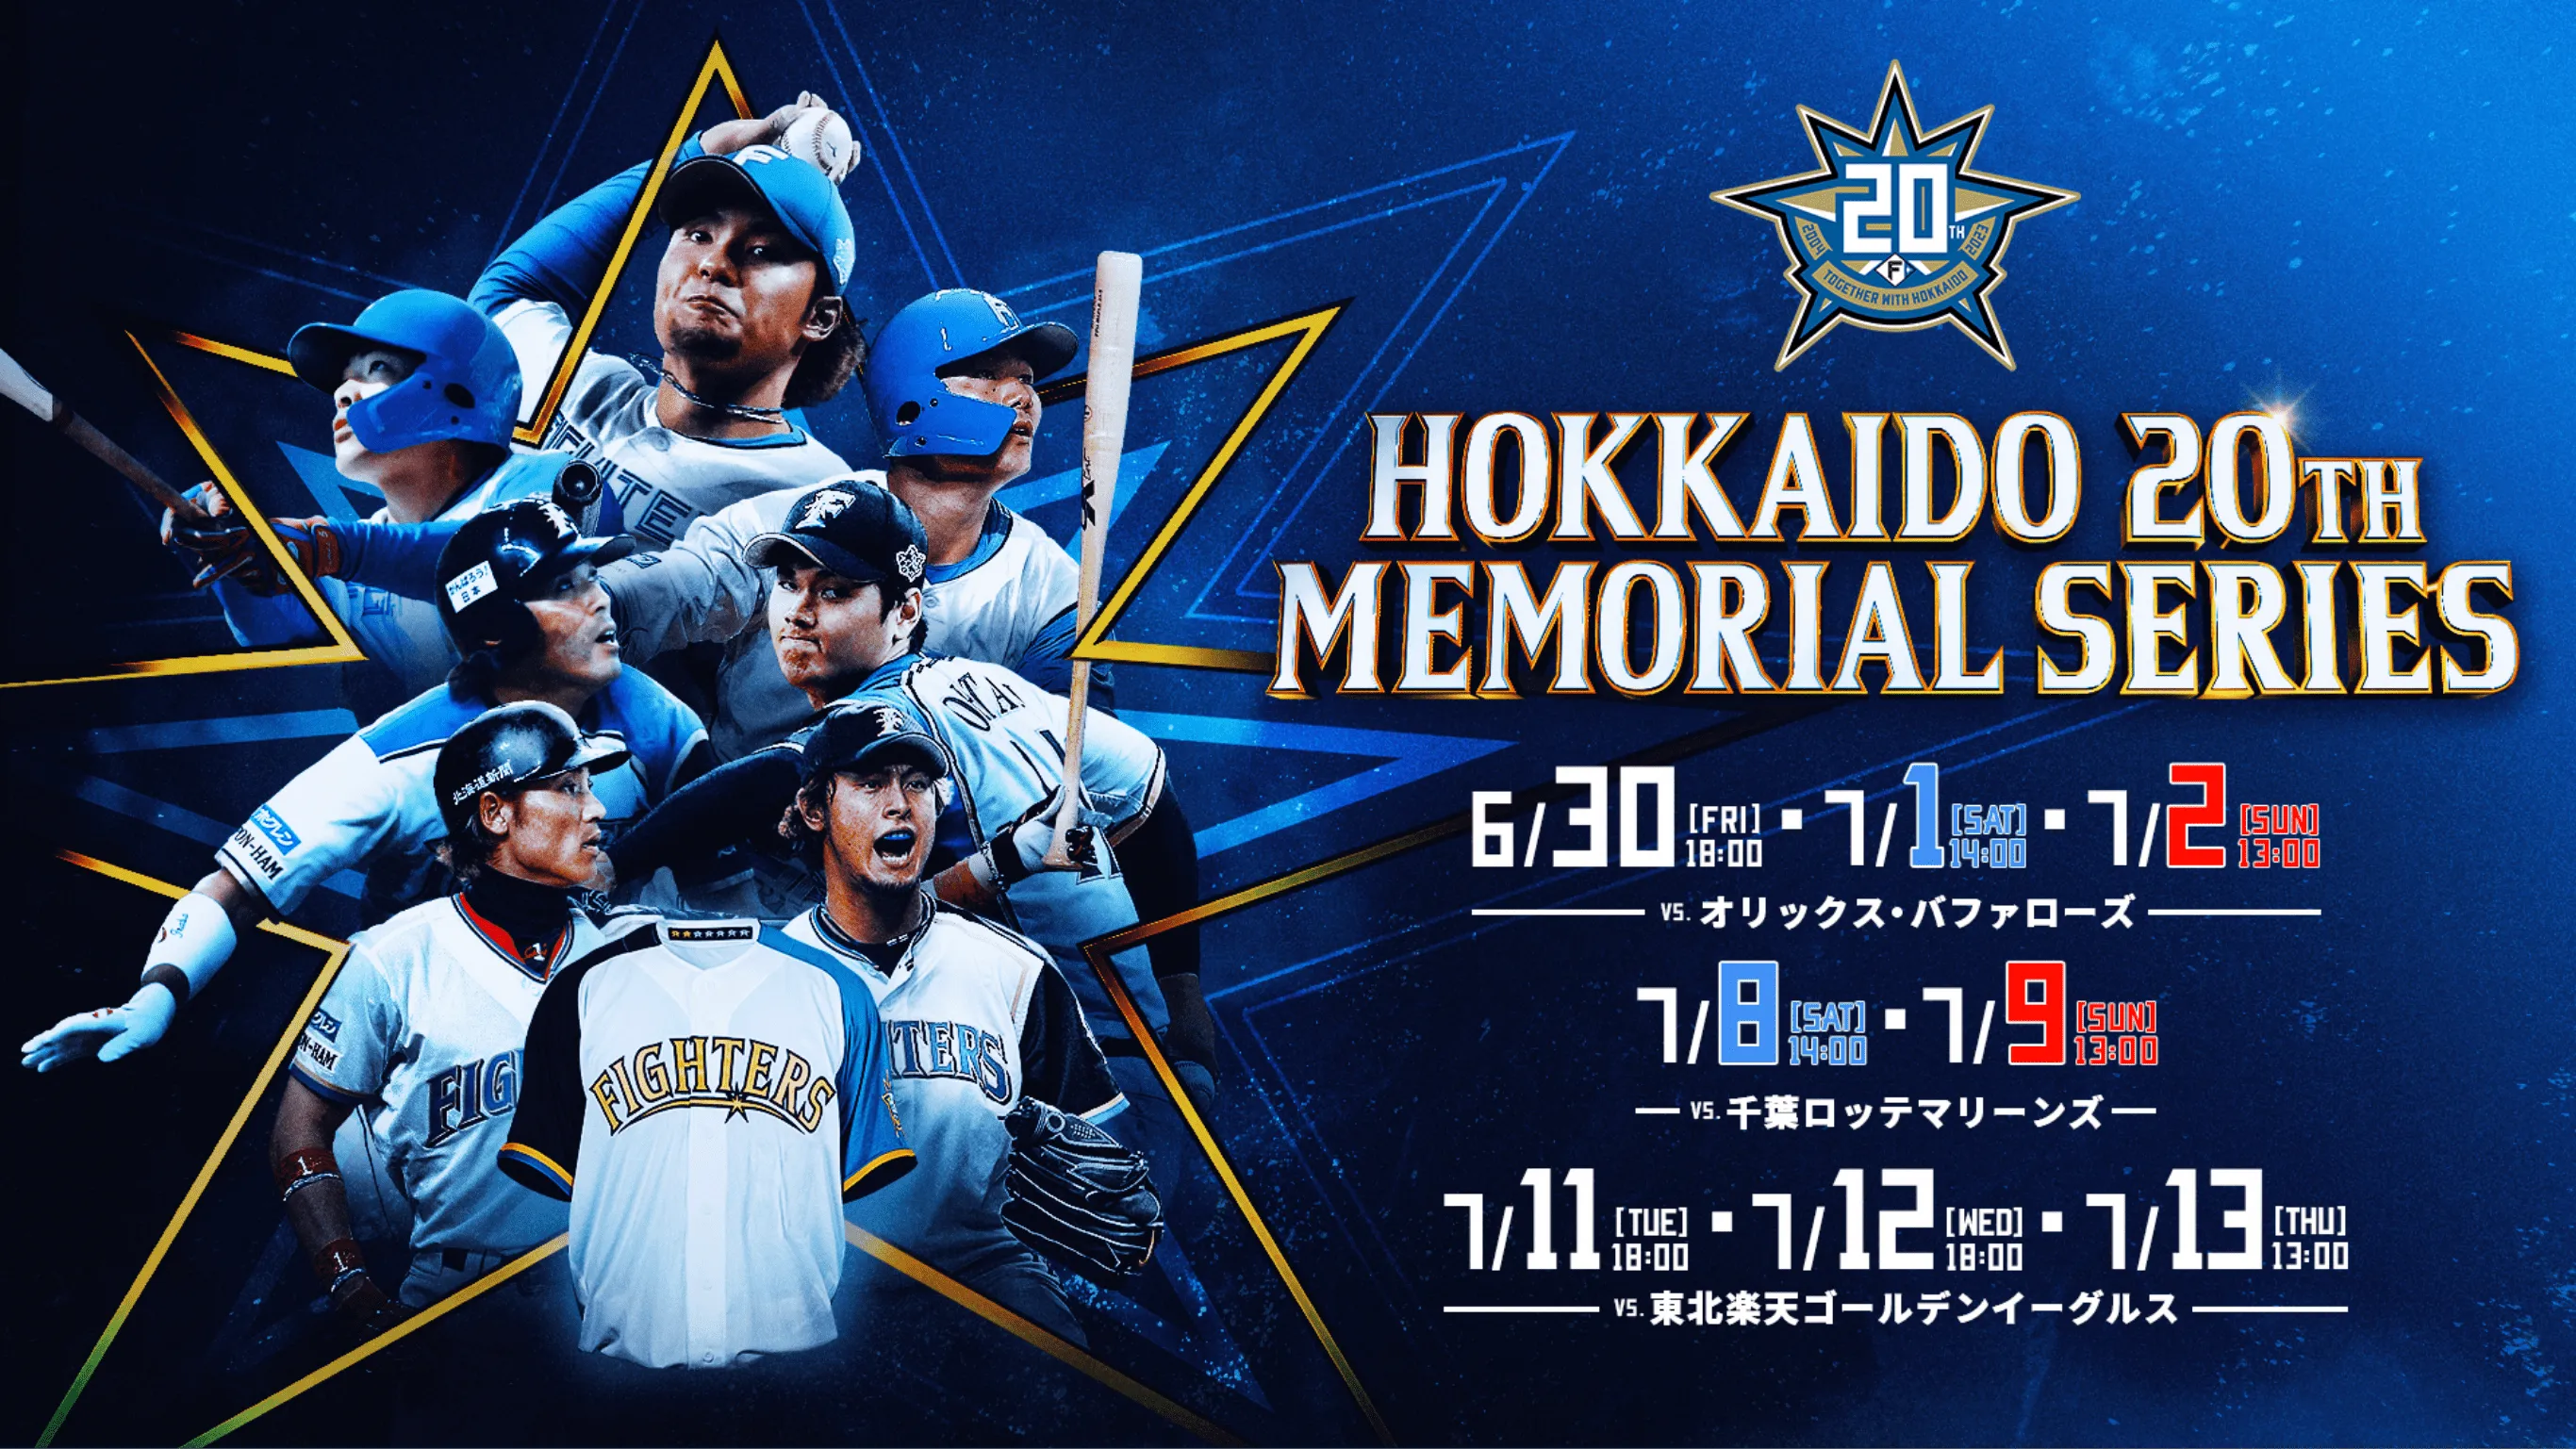 HOKKAIDO 20TH MEMORIAL SERIES